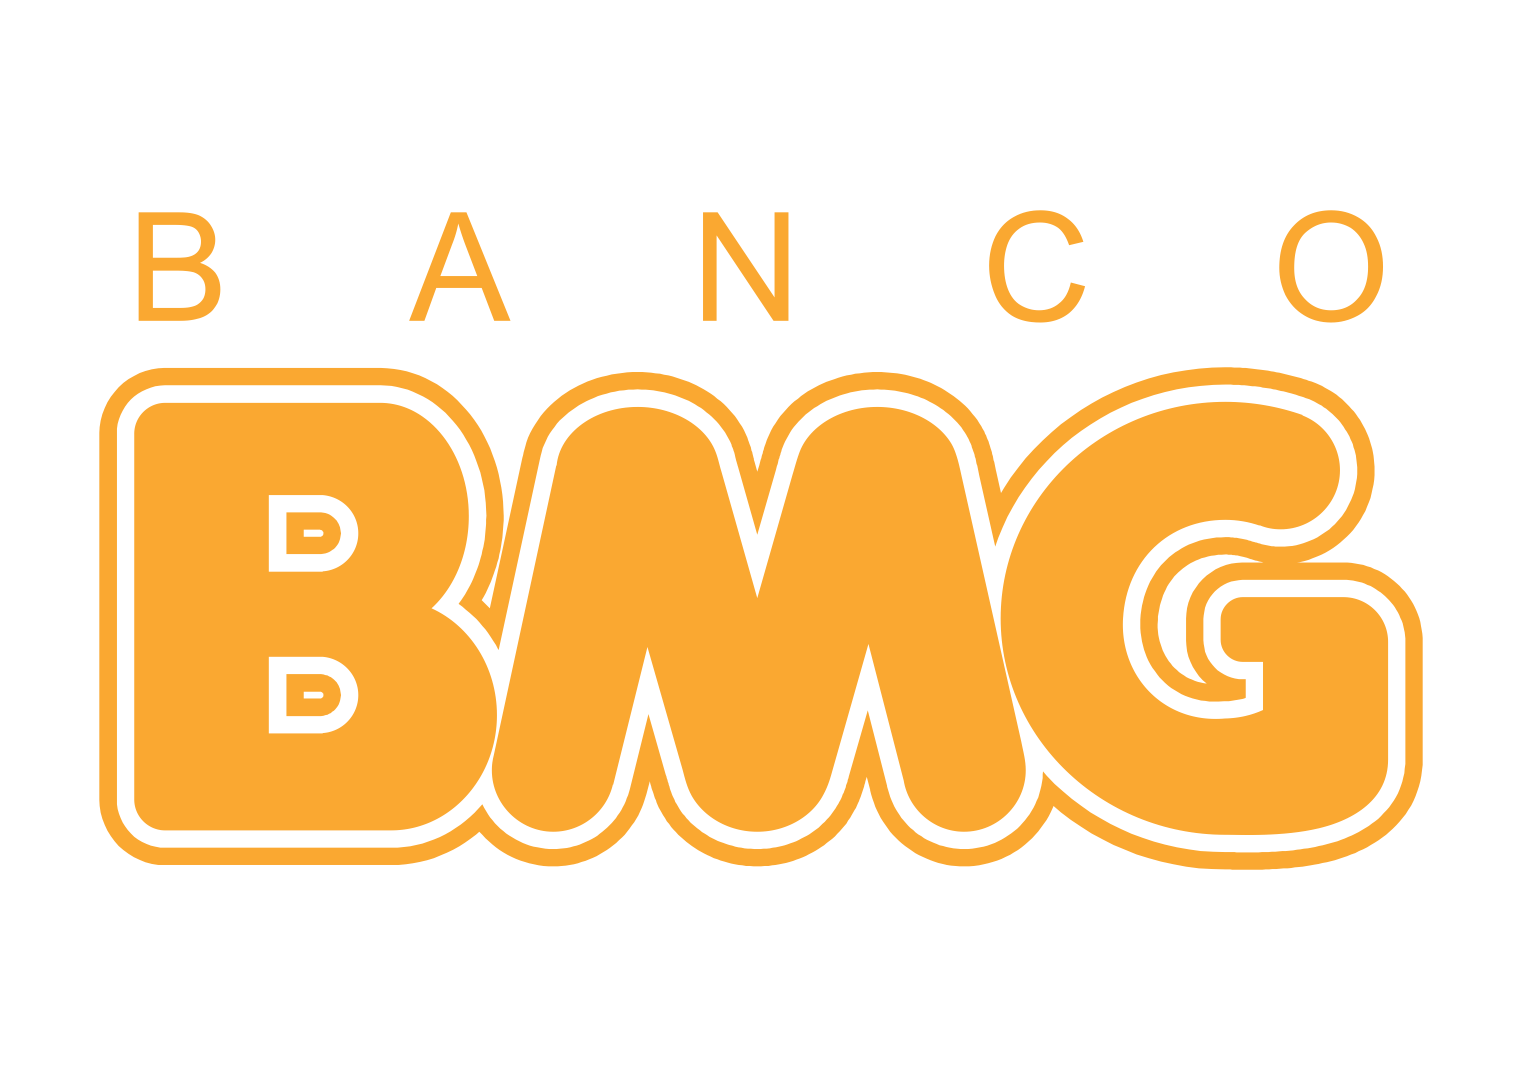 Banco BMG Logo photo - 1